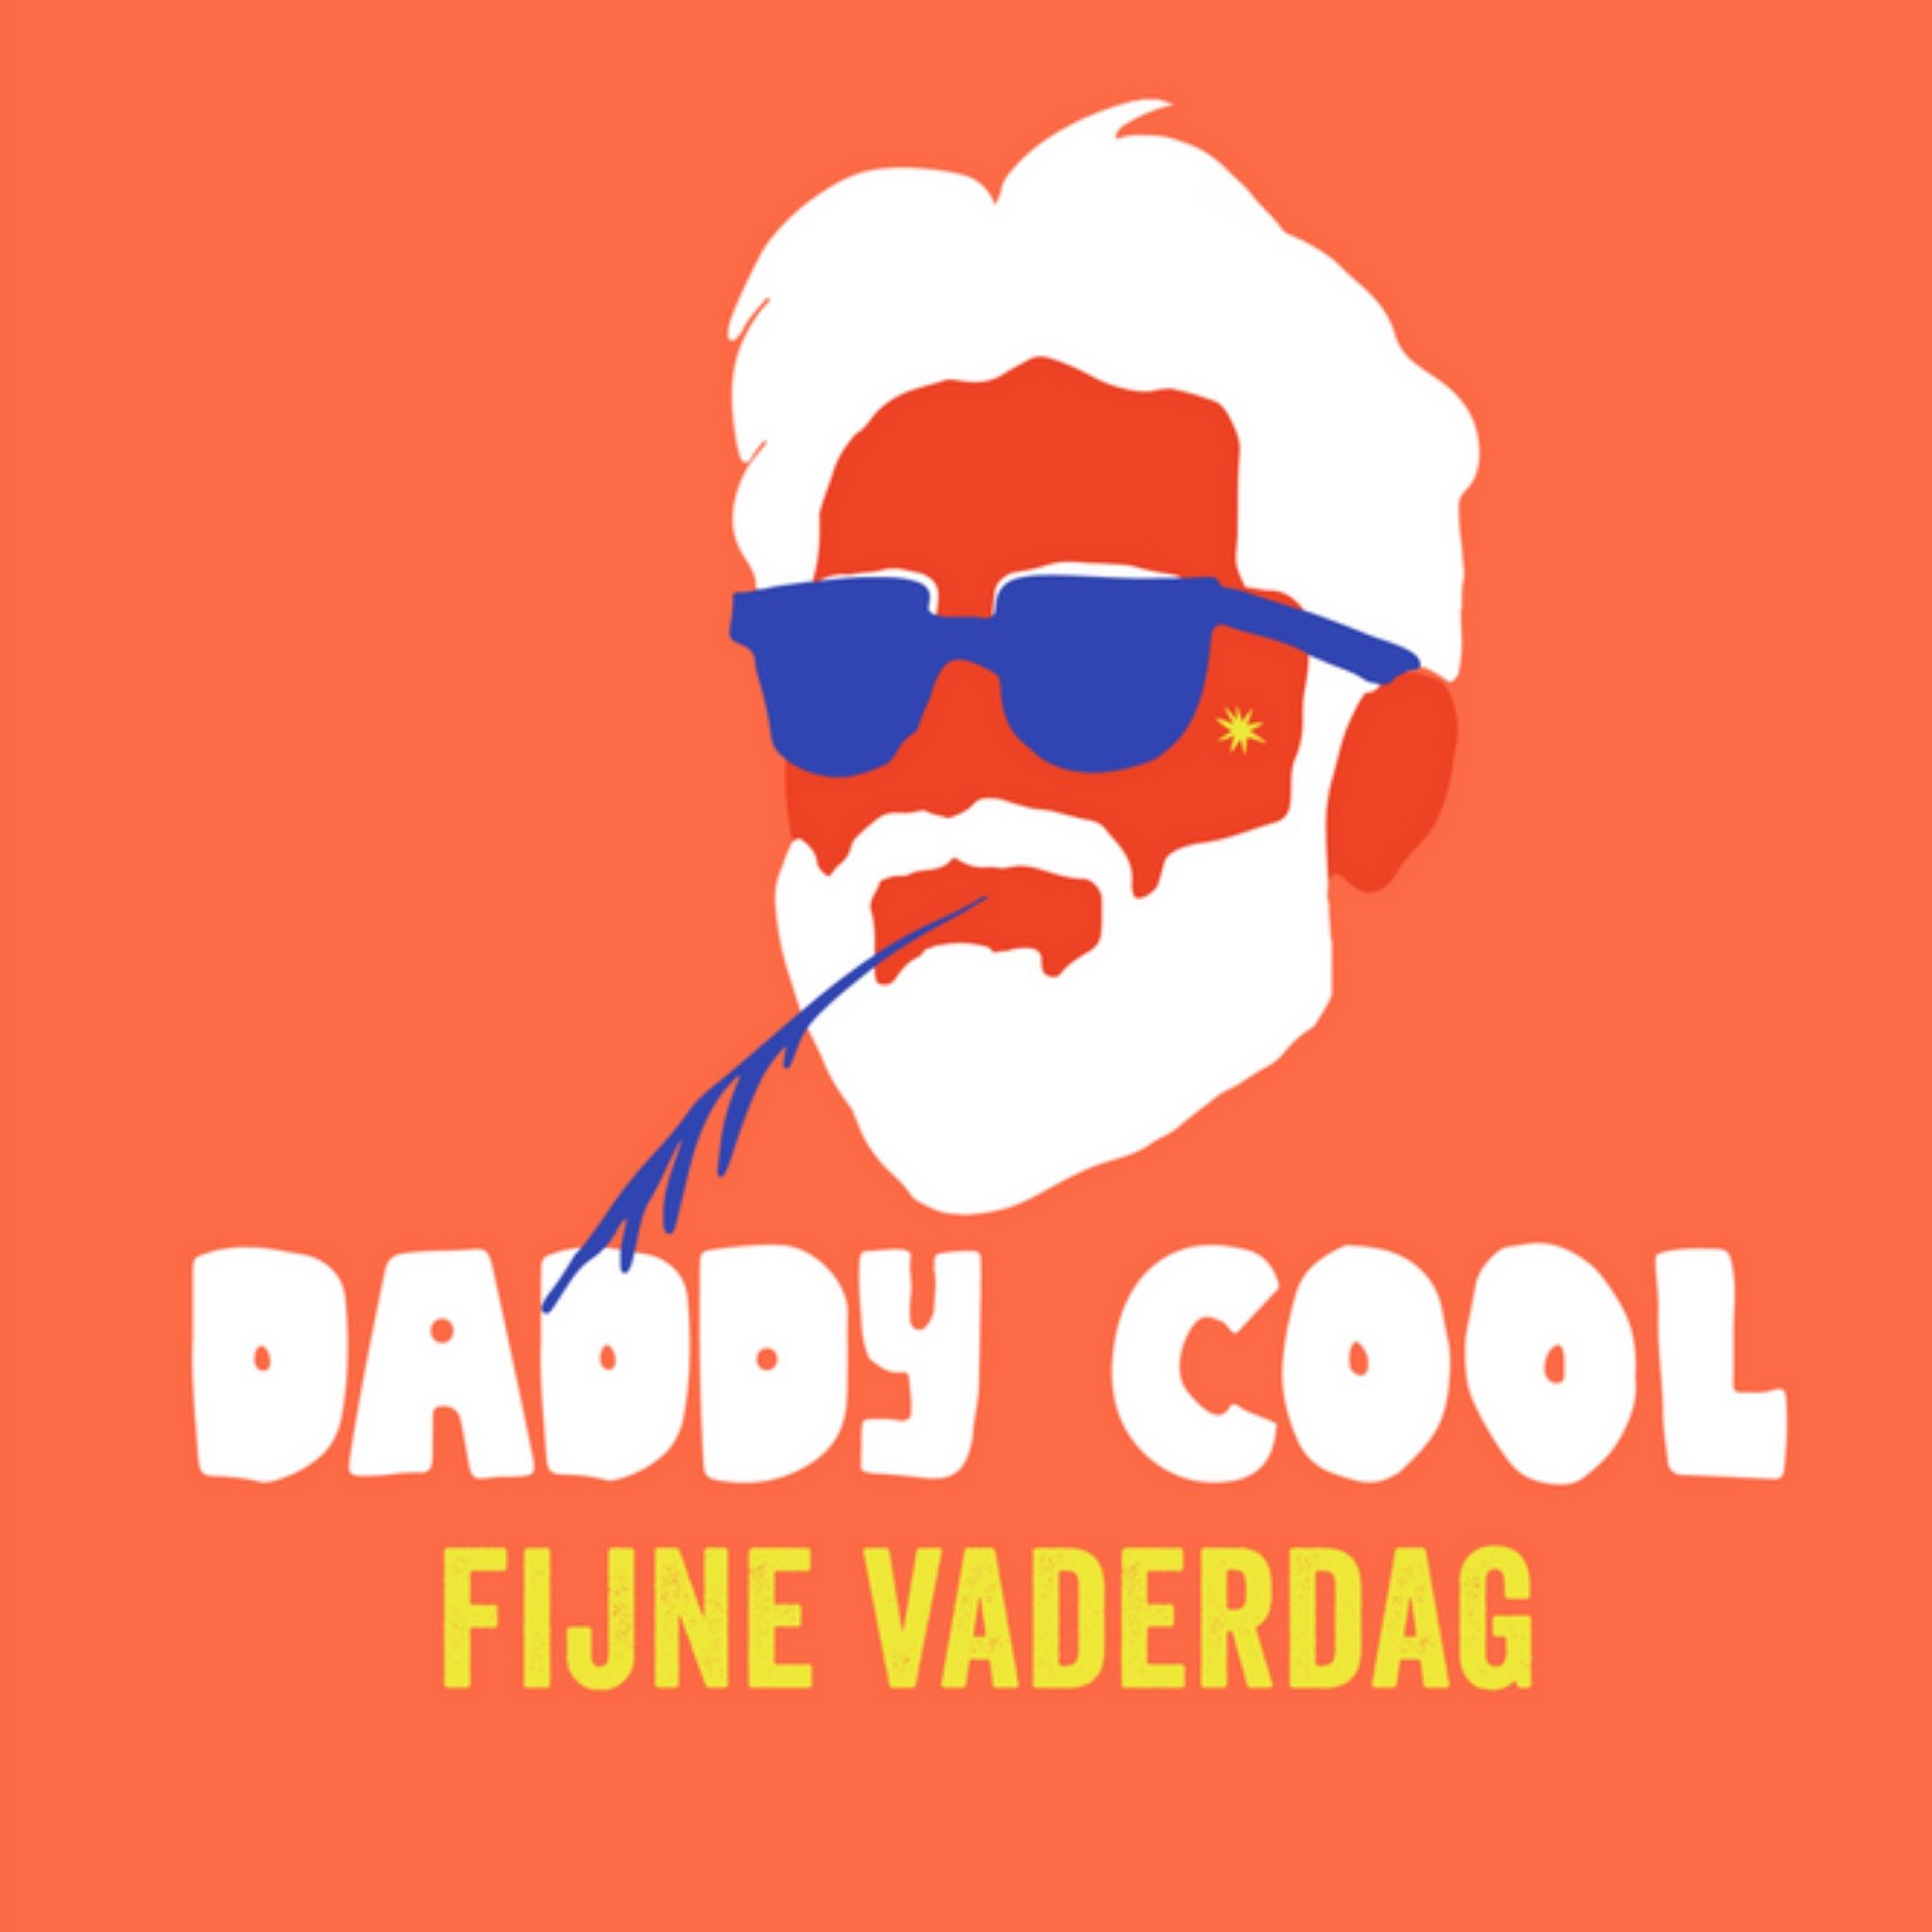 Vaderdagkaart - daddy cool